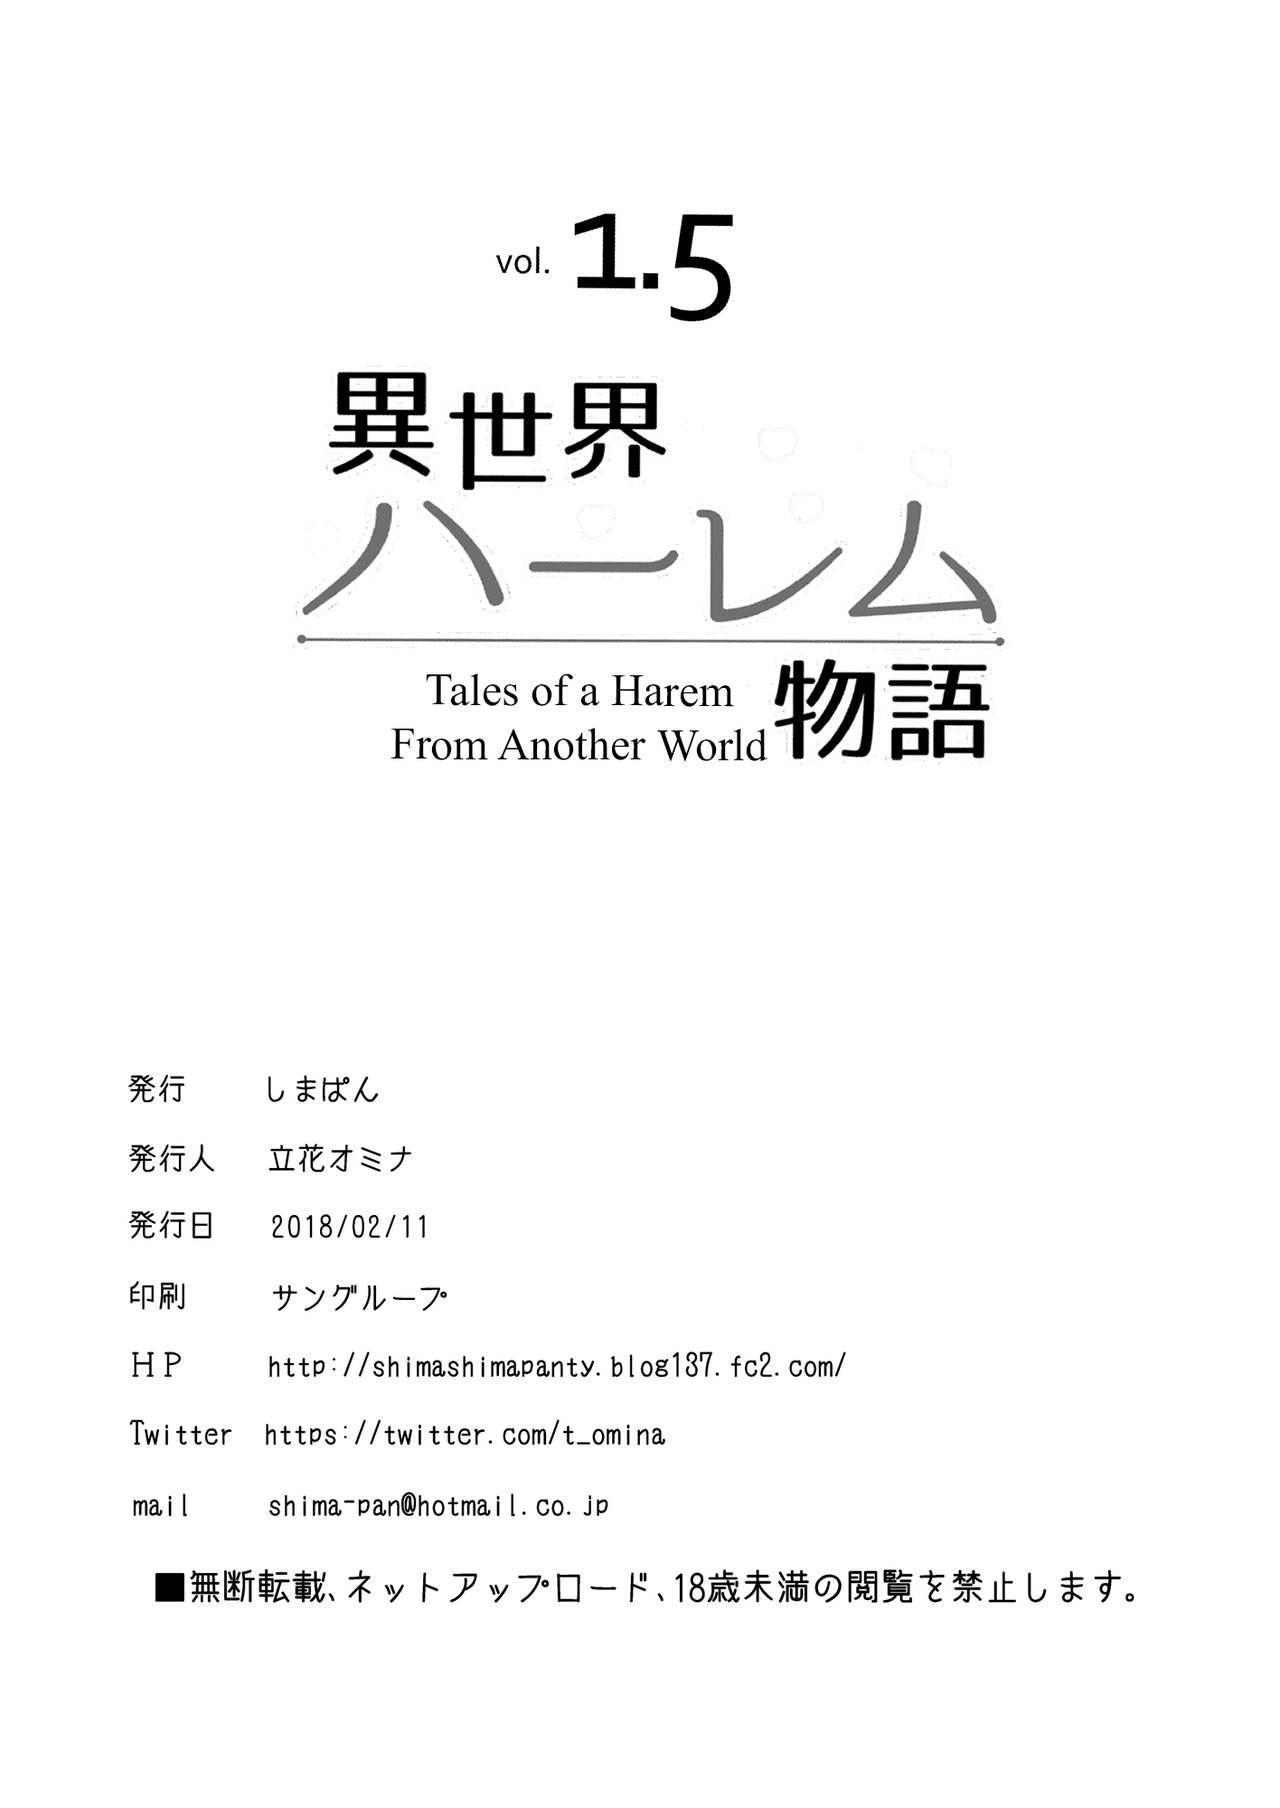 Isekai Harem Monogatari - Tales of Harem Vol. 1.5｜Tales of a Harem from Another World Vol. 1.5 8